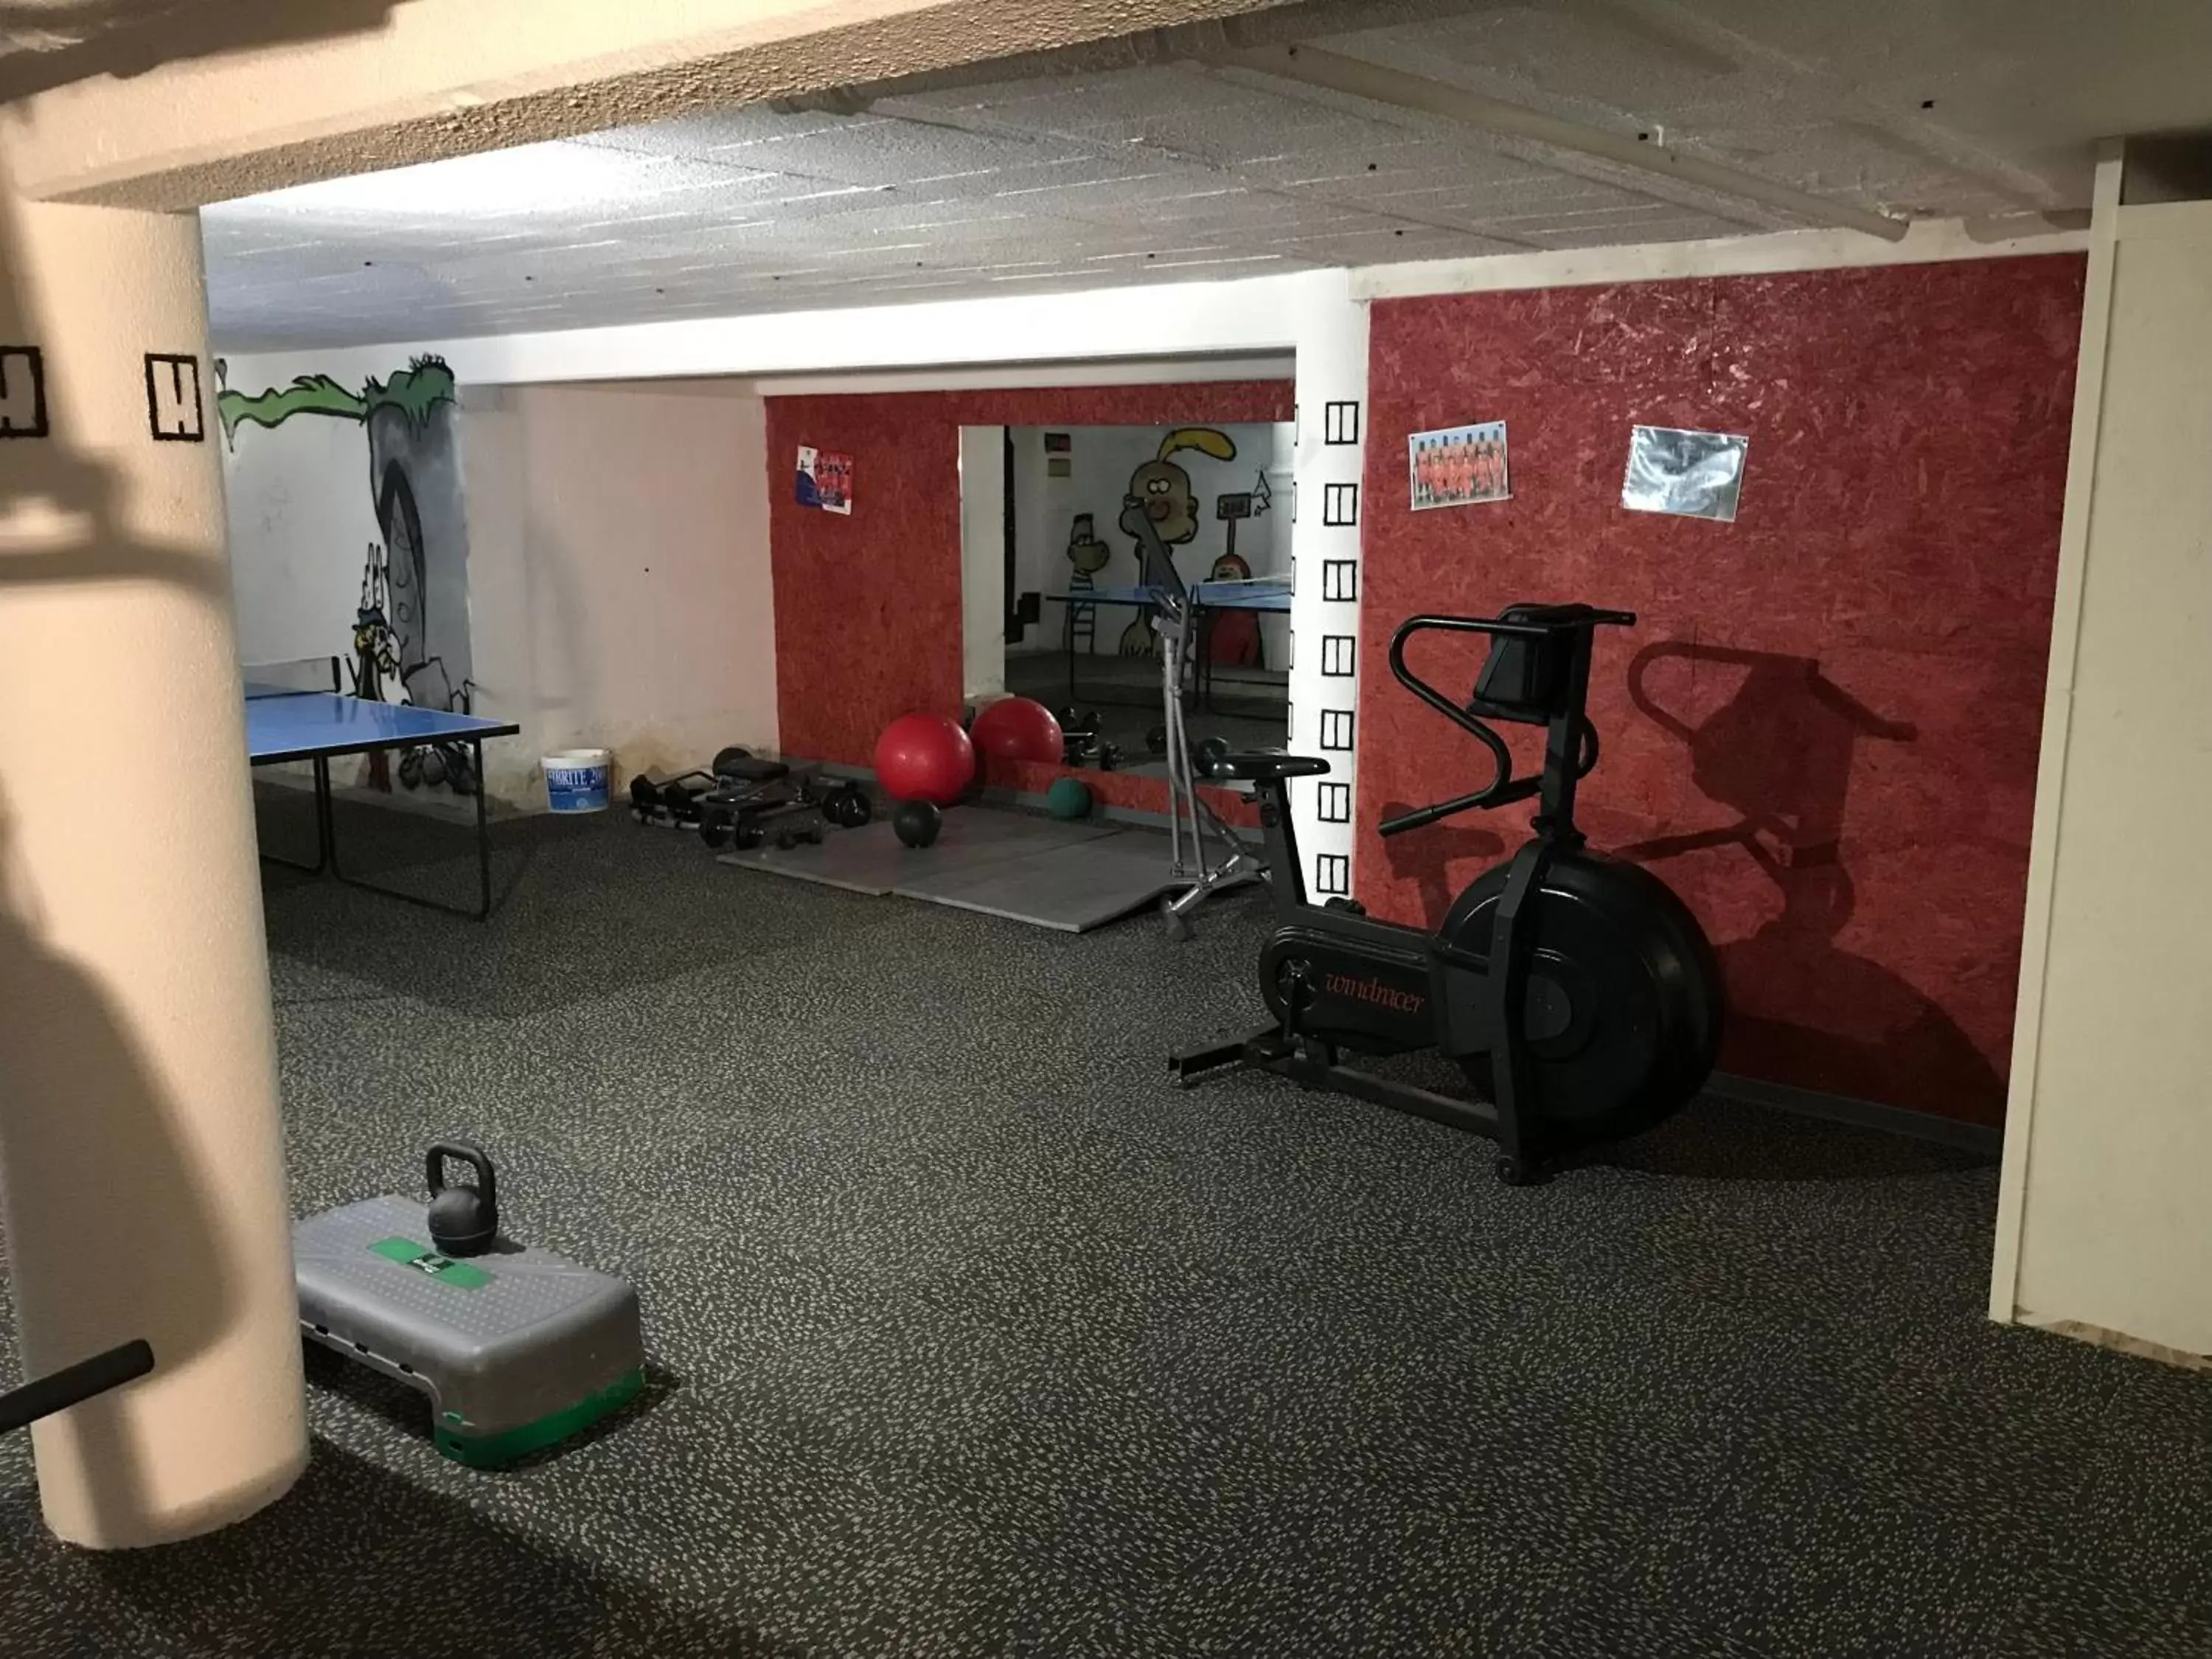 Fitness centre/facilities, Fitness Center/Facilities in La Demeure des 2 Trésors